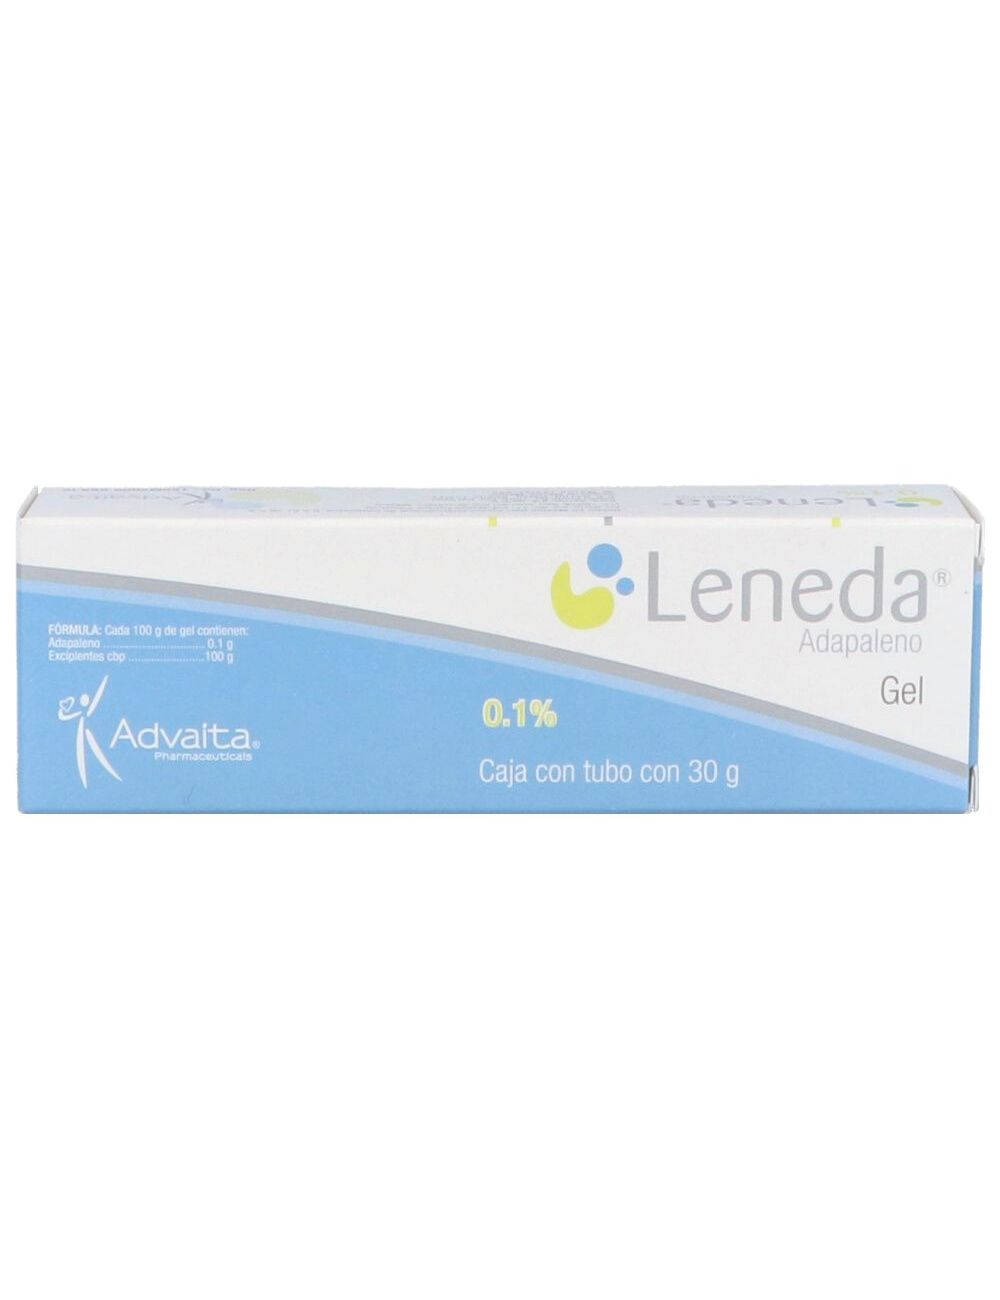 Leneda Gel 0.1% Caja Con Tubo Con 30 g